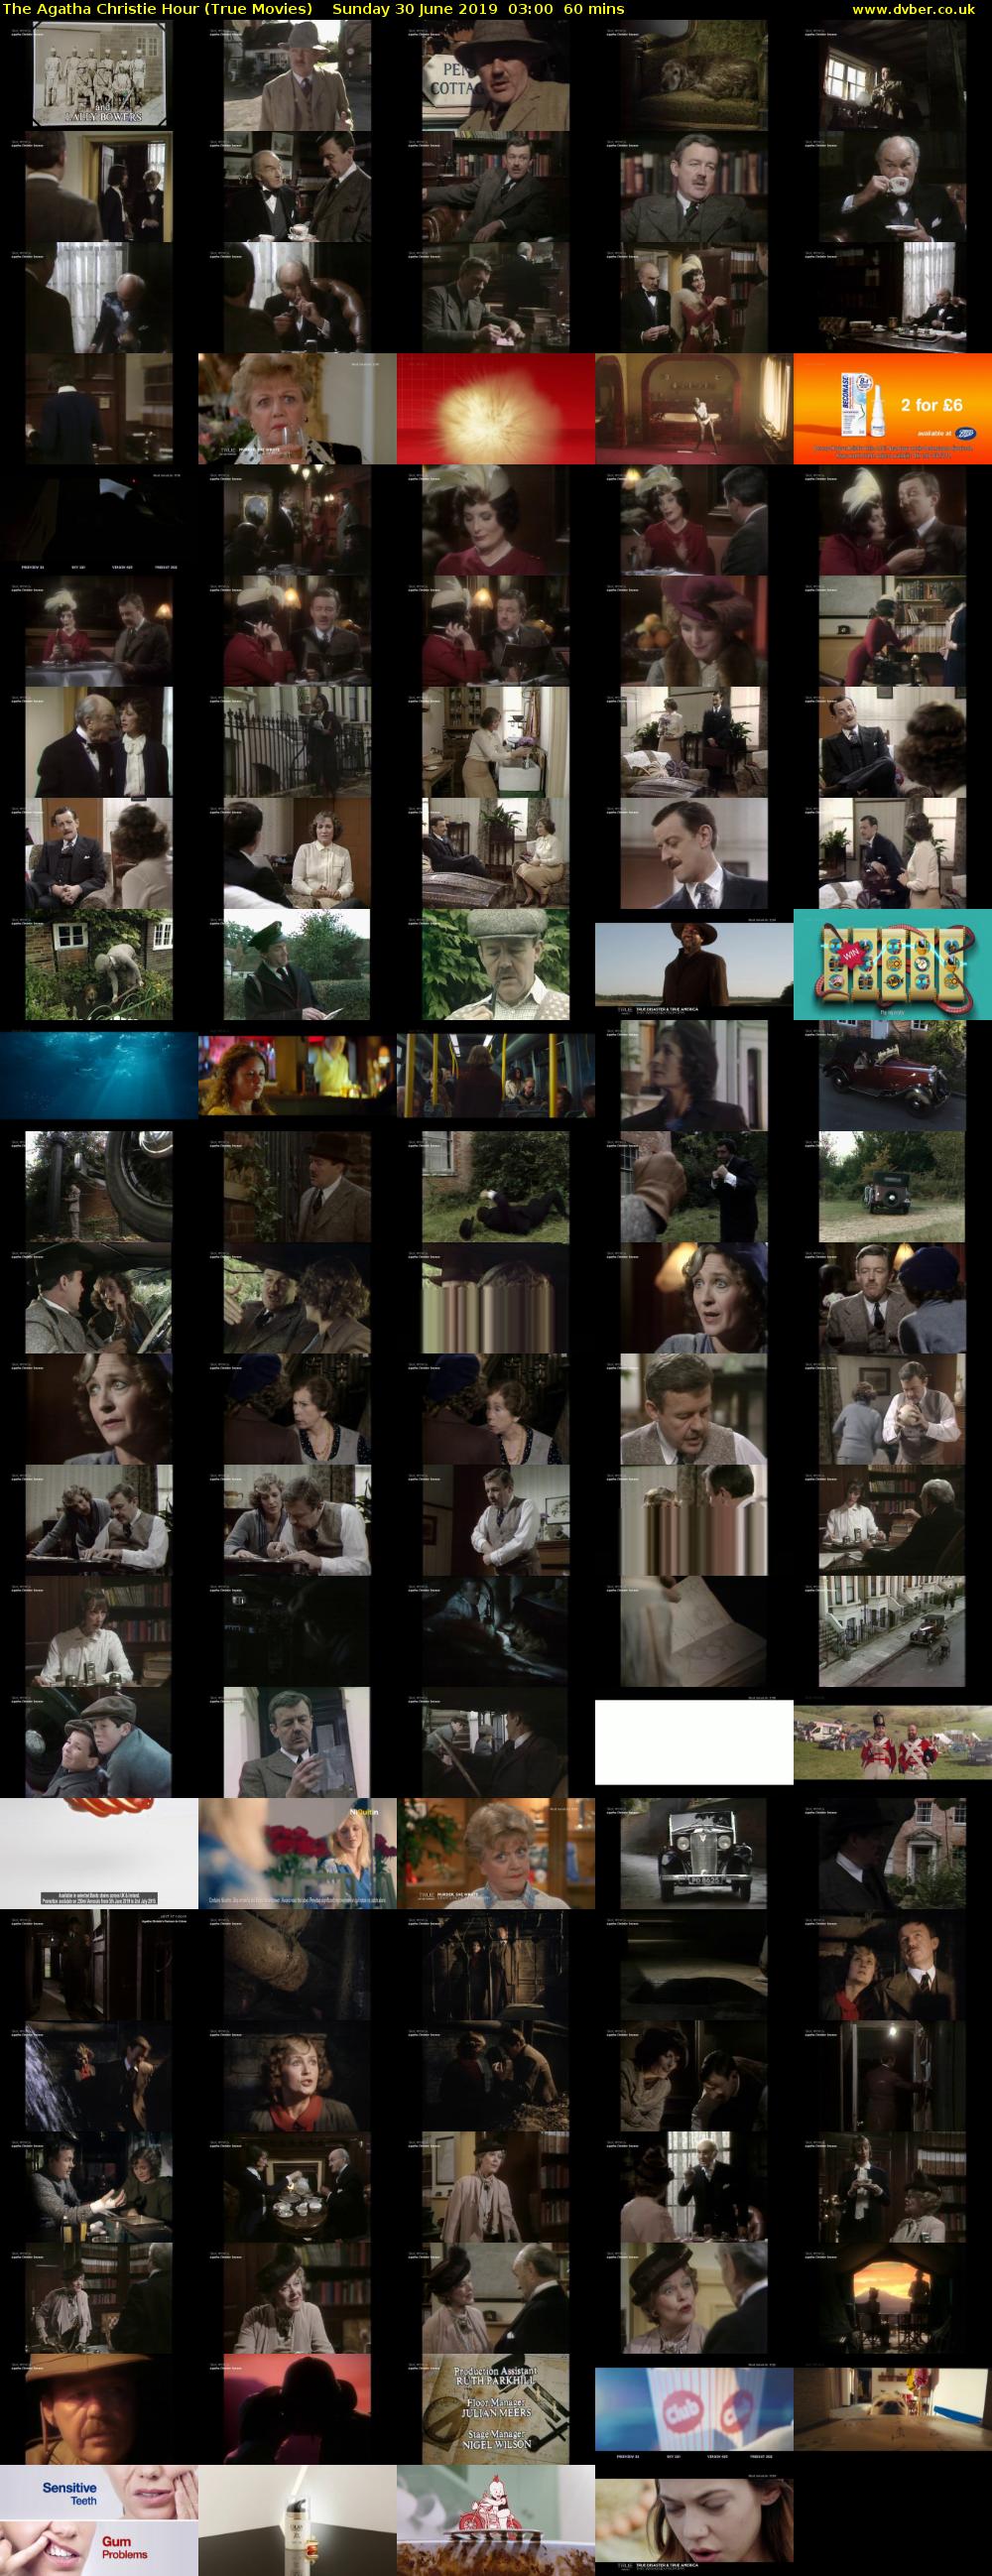 The Agatha Christie Hour (True Movies) Sunday 30 June 2019 03:00 - 04:00